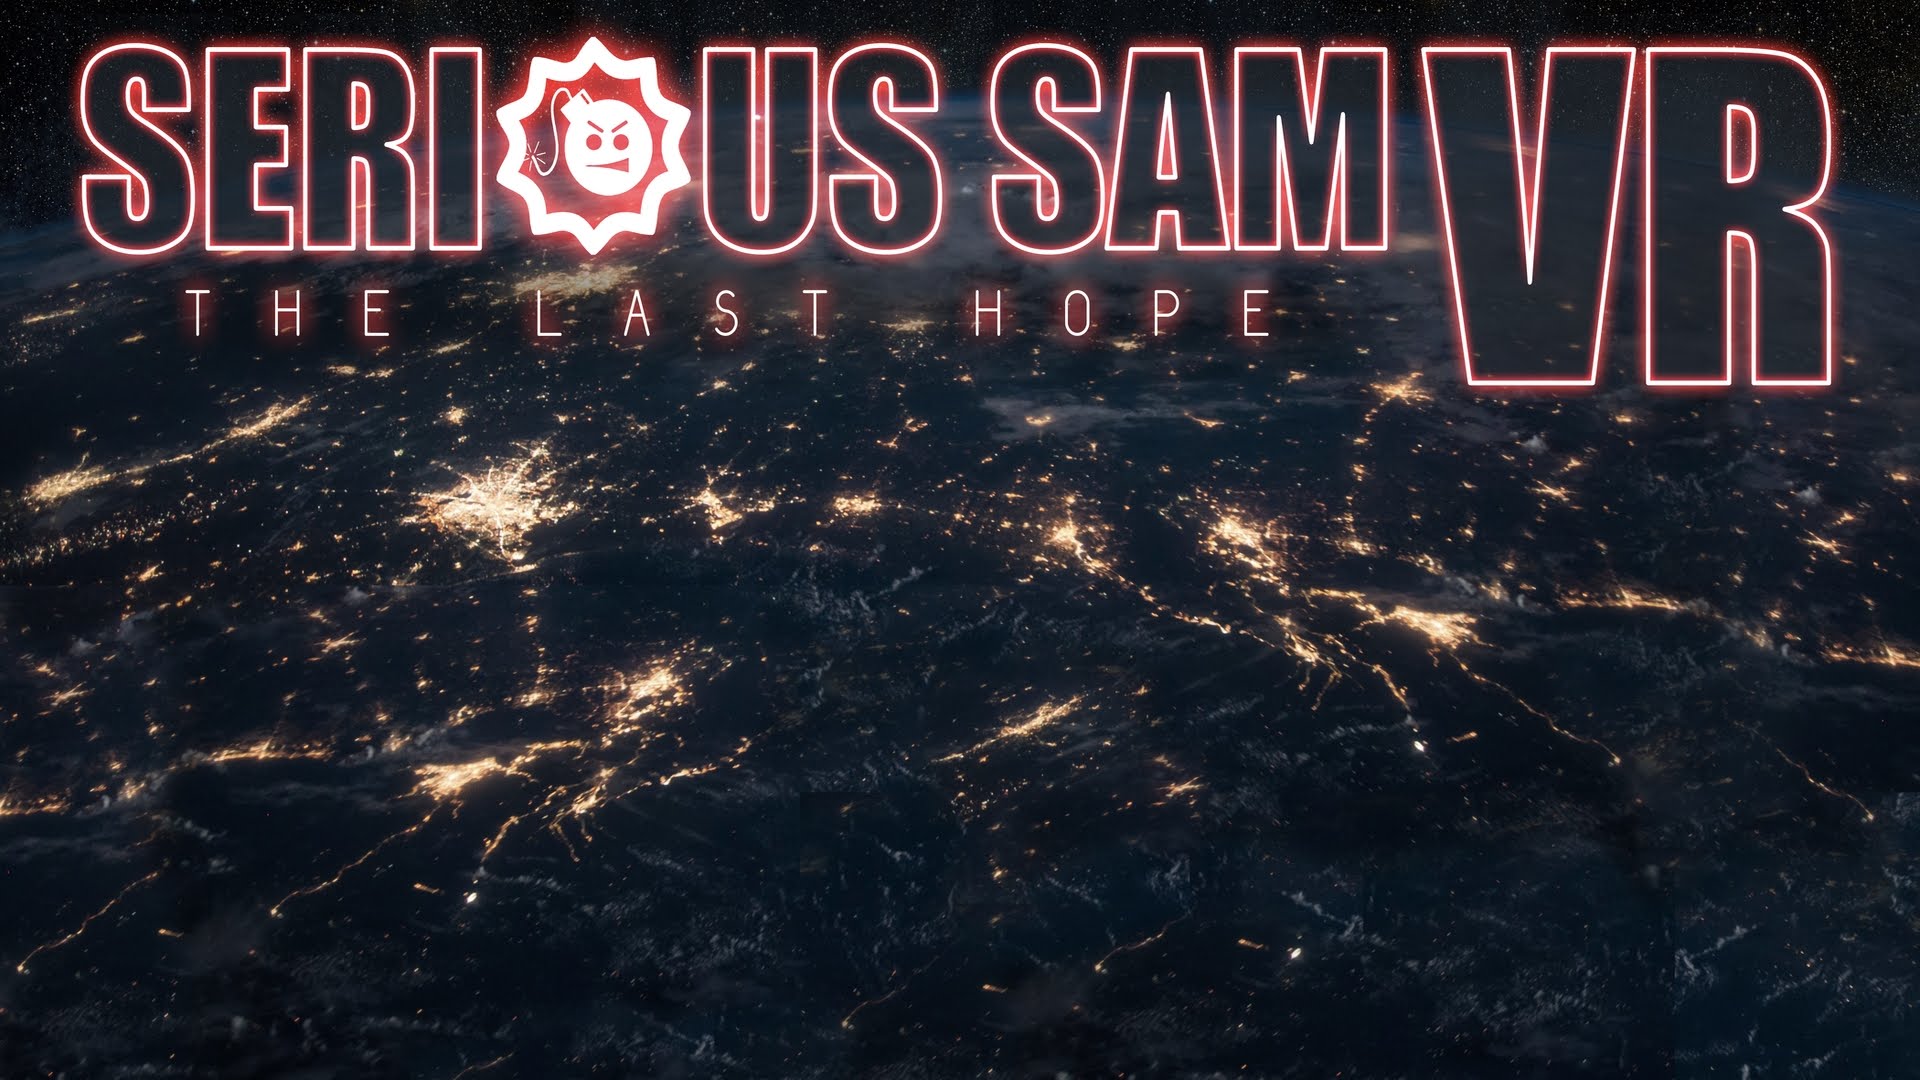 Serious Sam se apunta a la realidad virtual en HTC Vive y Oculus Rift